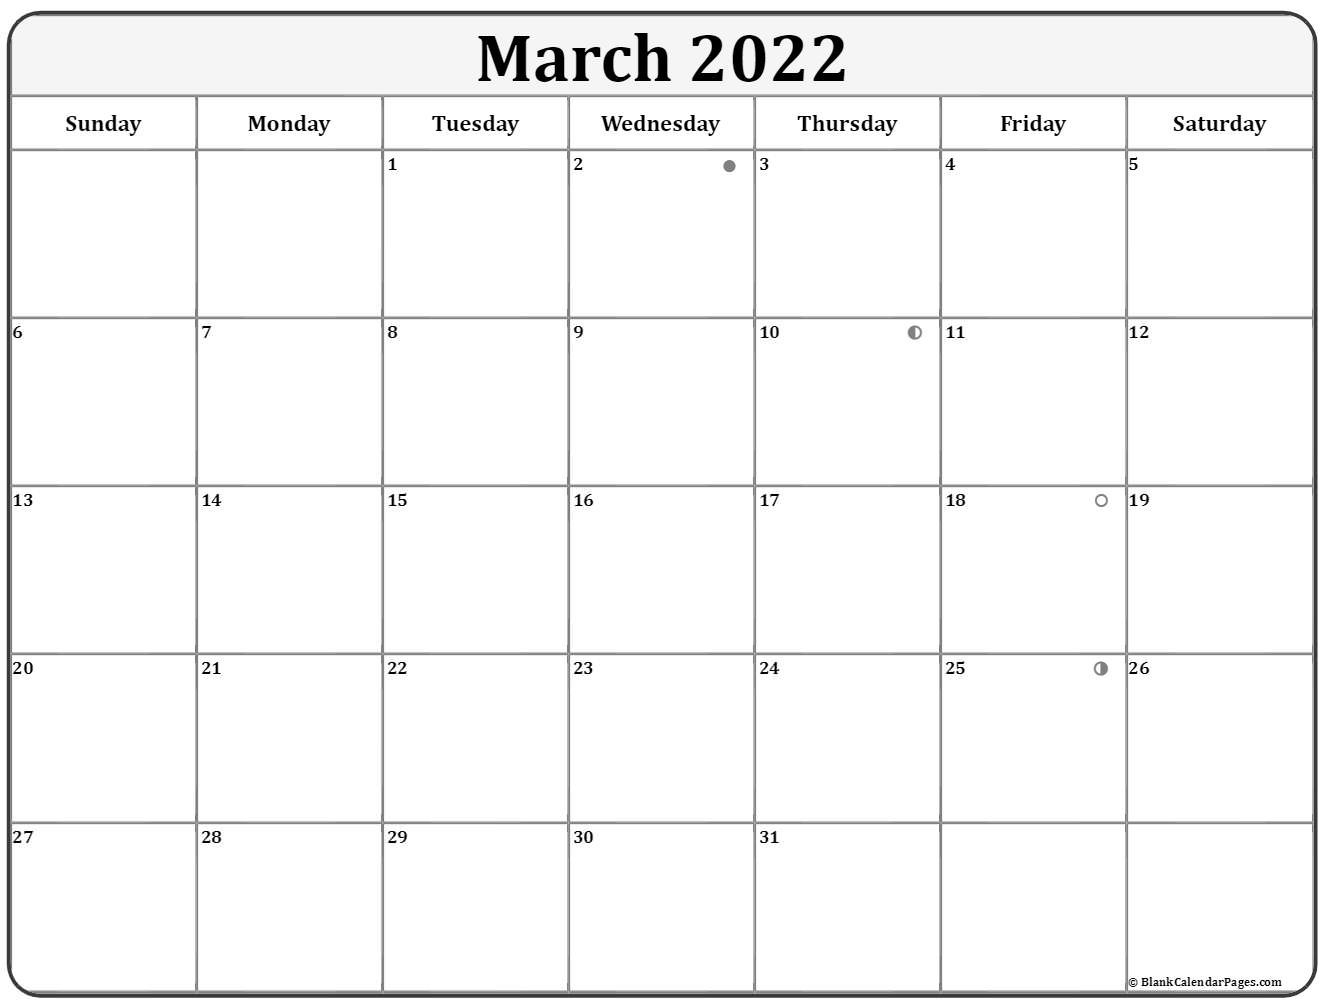 March 2022 Lunar Calendar | Moon Phase Calendar  Calendar For 2022 With Moon Phases